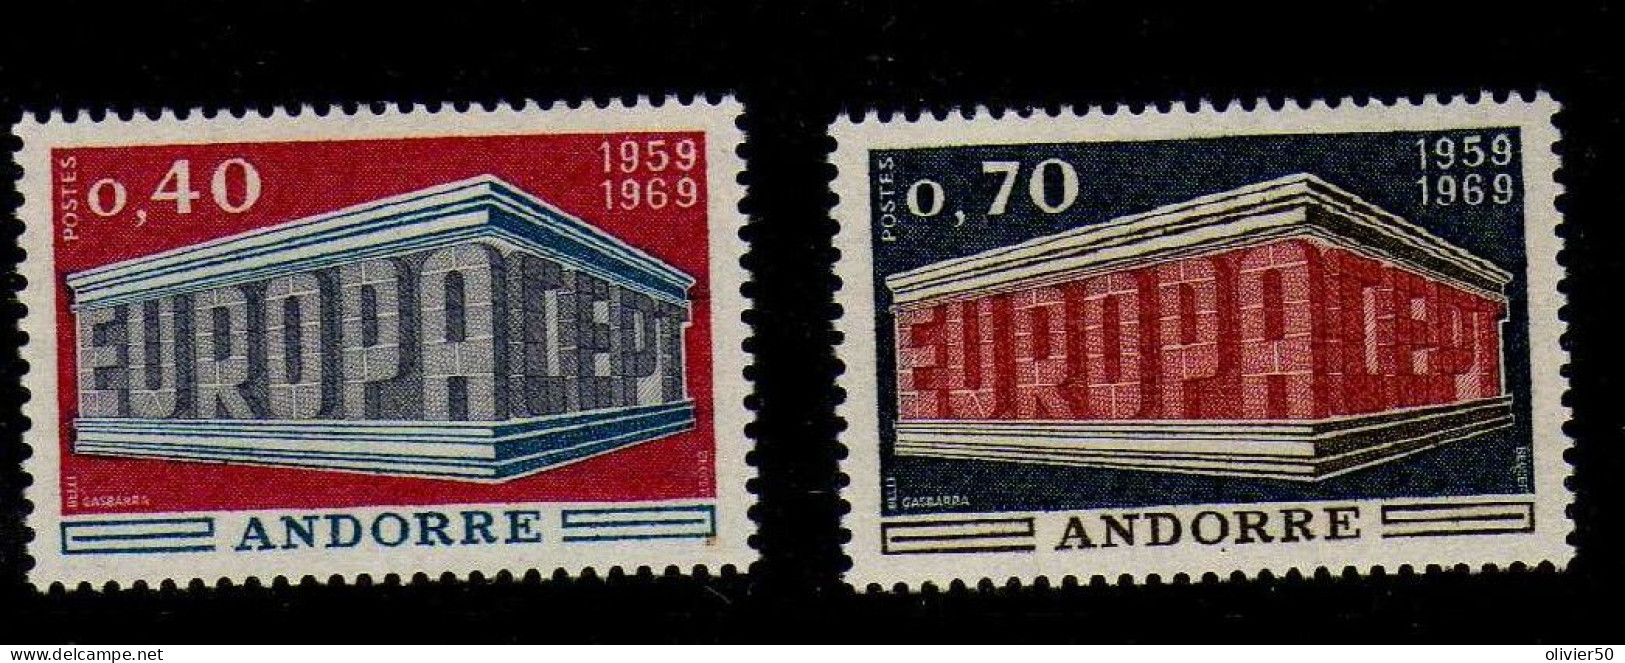 Andorre Francaise -  1969 - Europa  -Neufs** - MNH  - - Nuovi